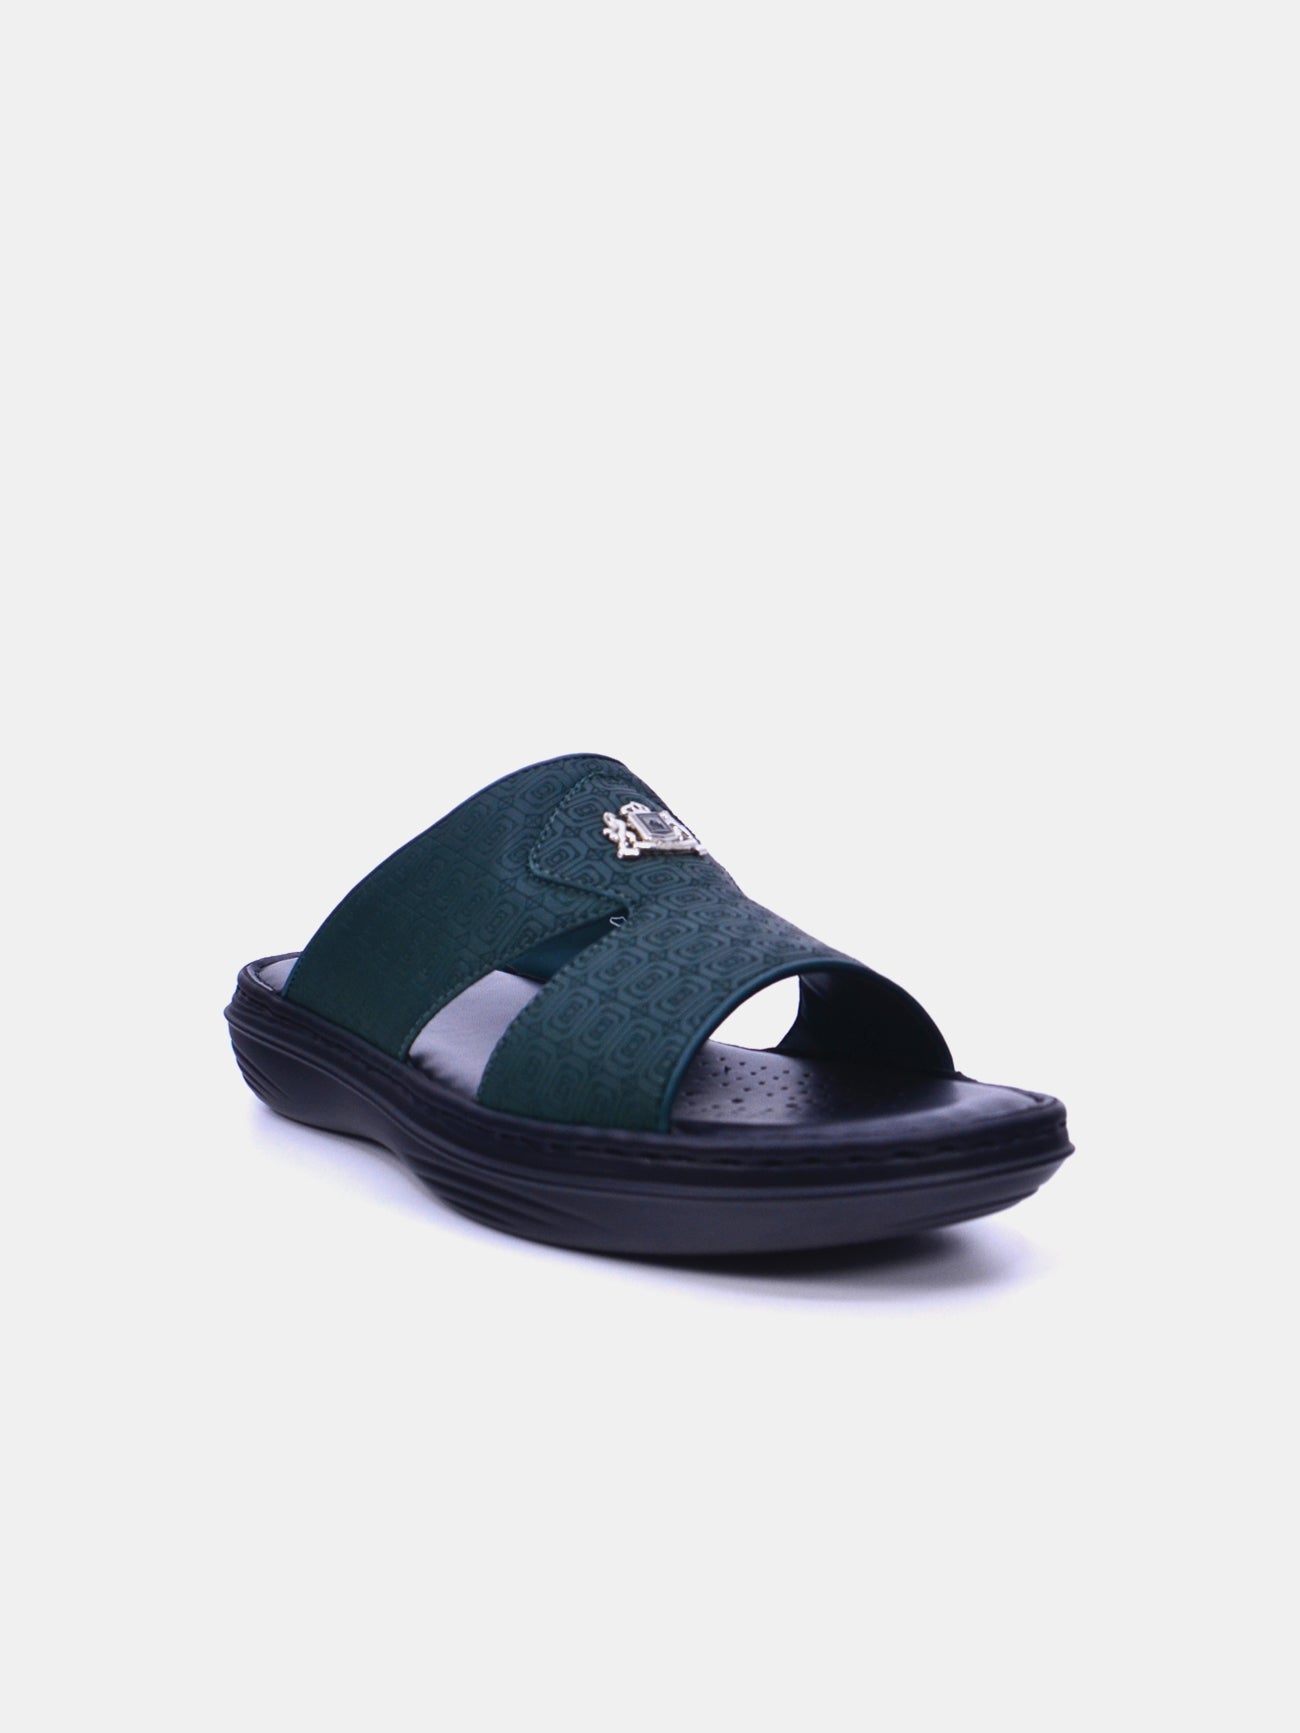 Barjeel Uno 21410-12 Men's Arabic Sandals #color_Green